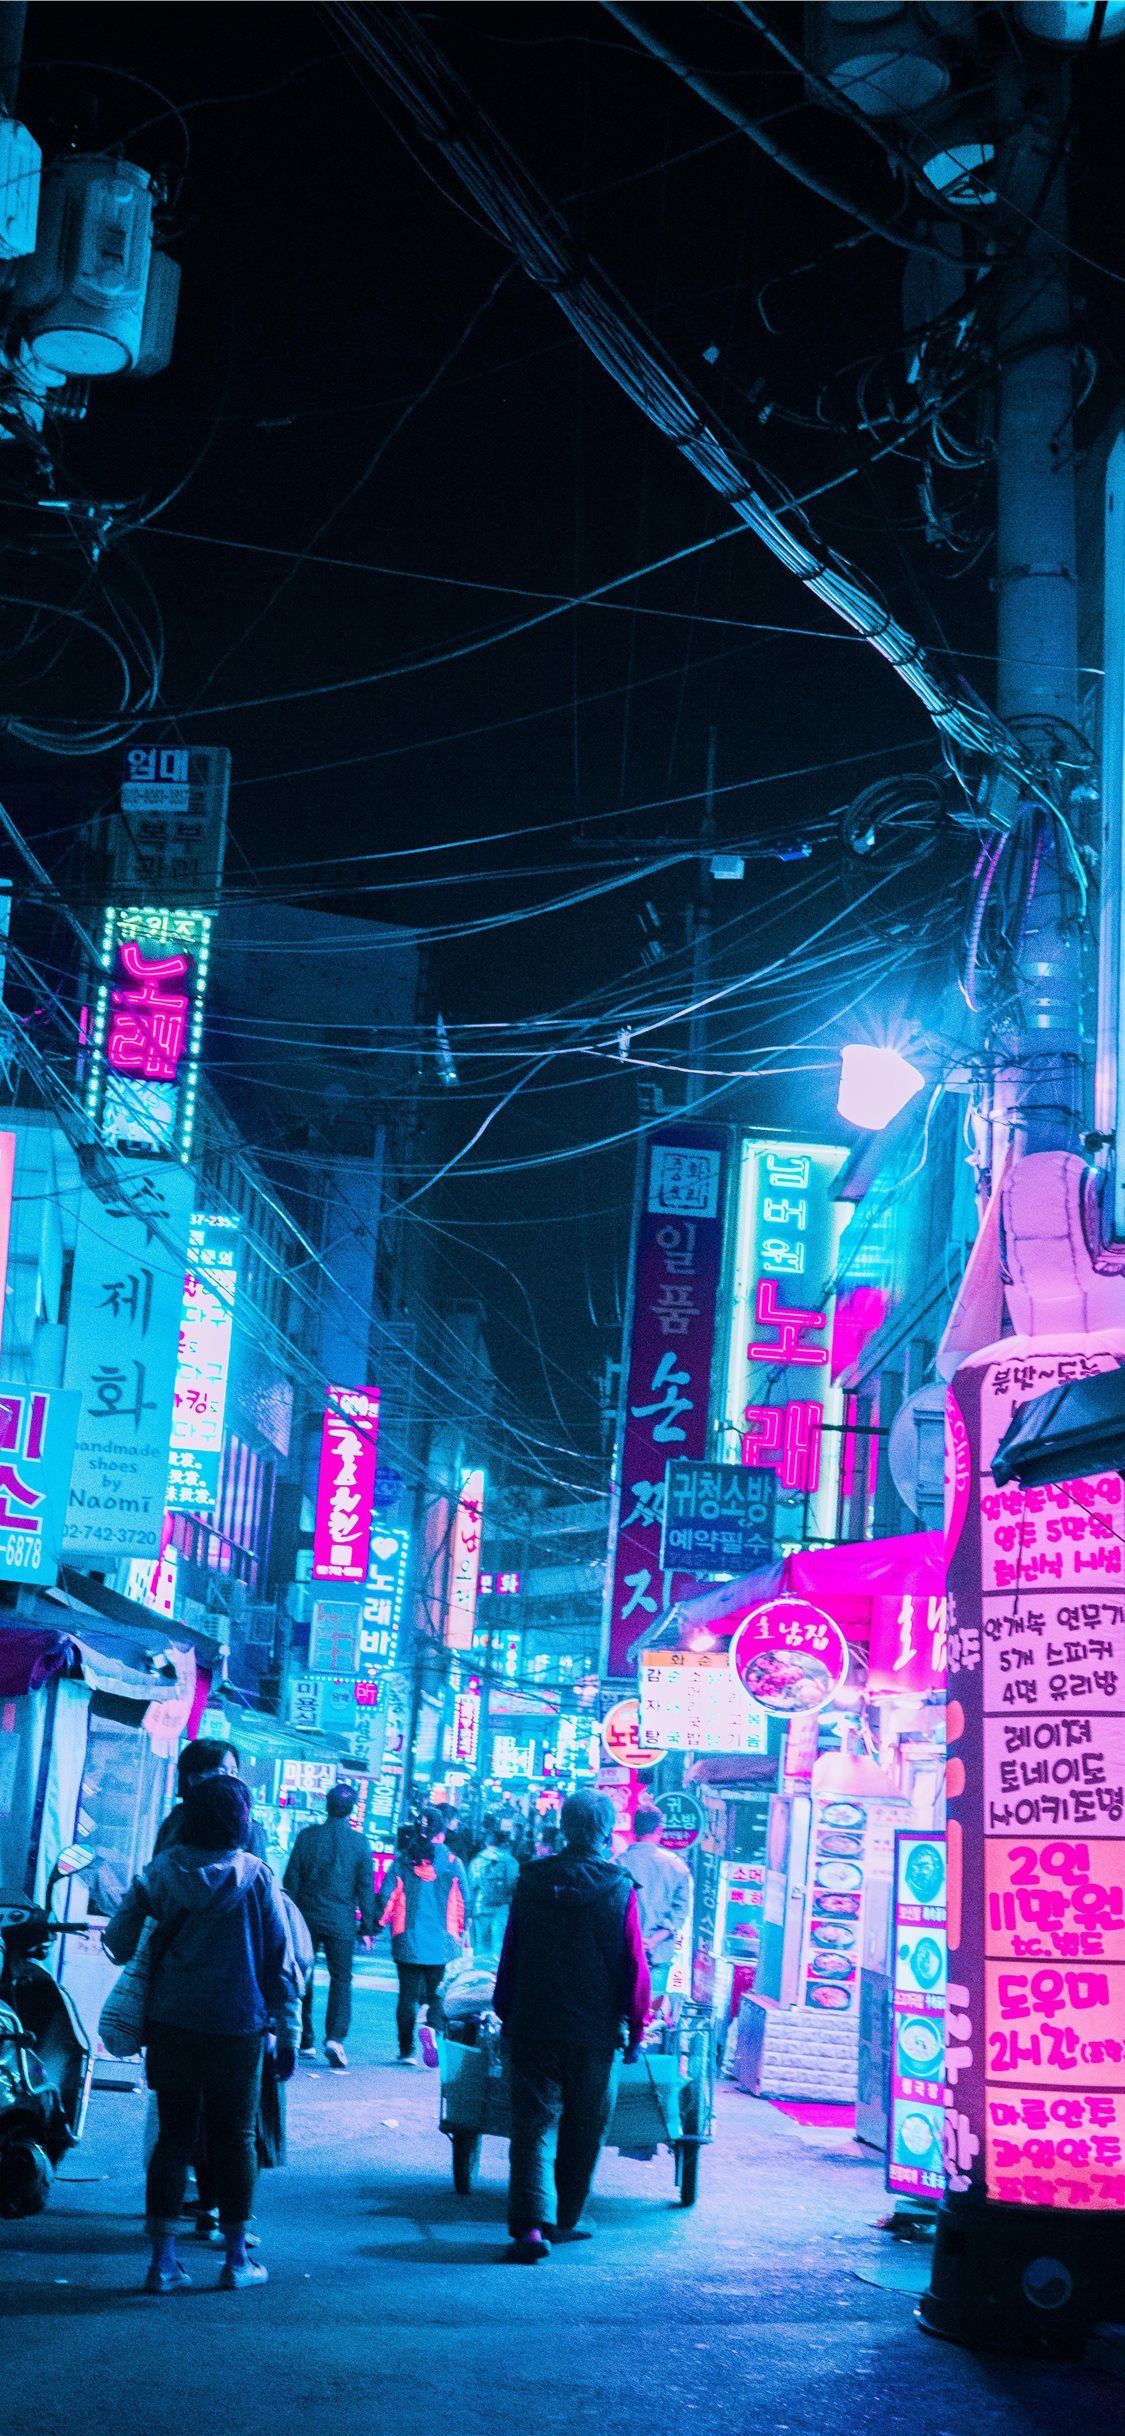 Best Cyberpunk iPhone X Wallpaper HD [2020]